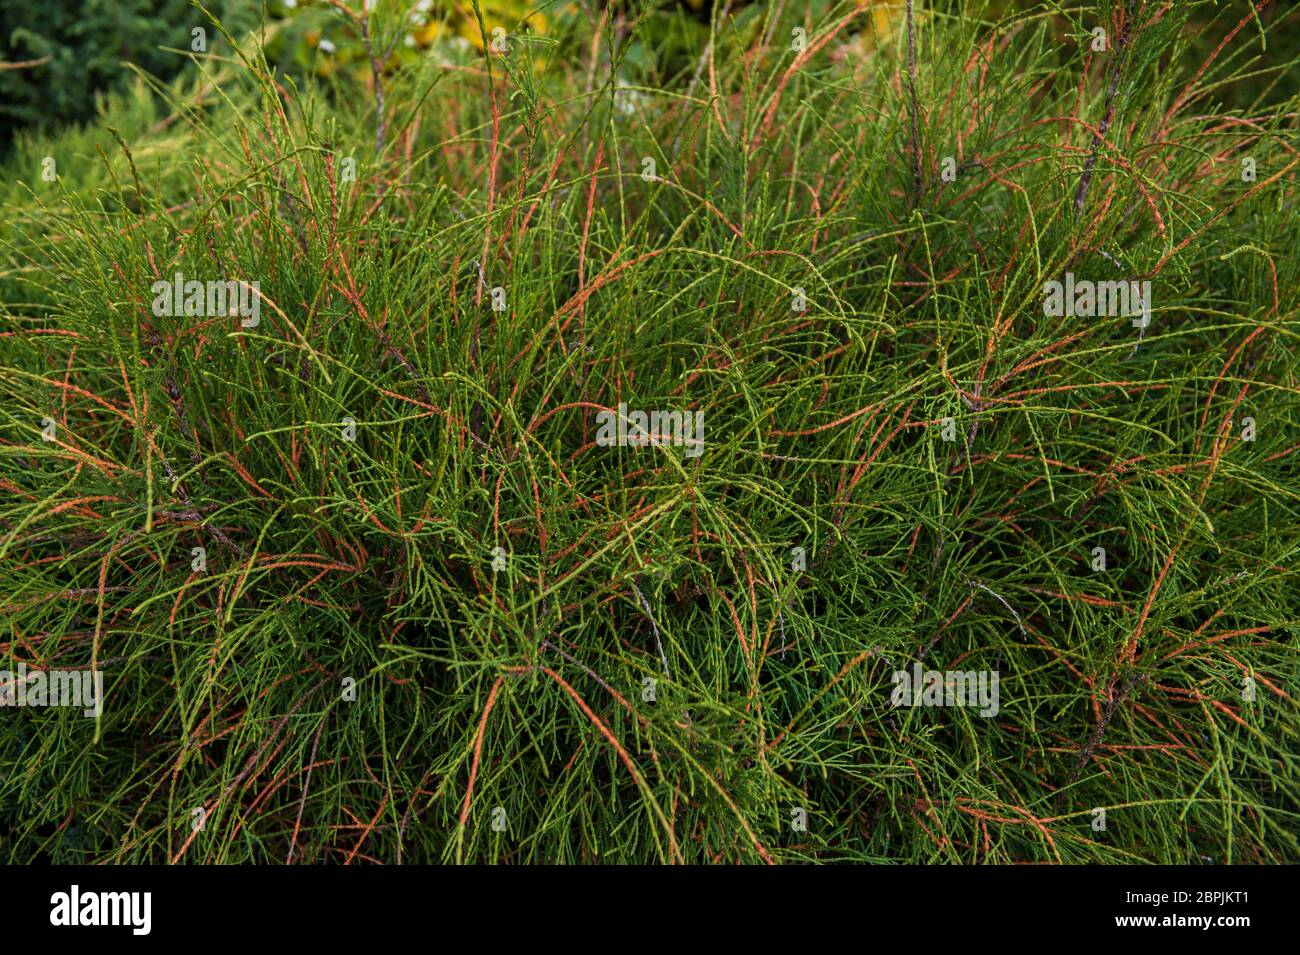 Green western thuja bush. Thuja occidentalis filiformis. Close up of a branch of thuja tree Stock Photo